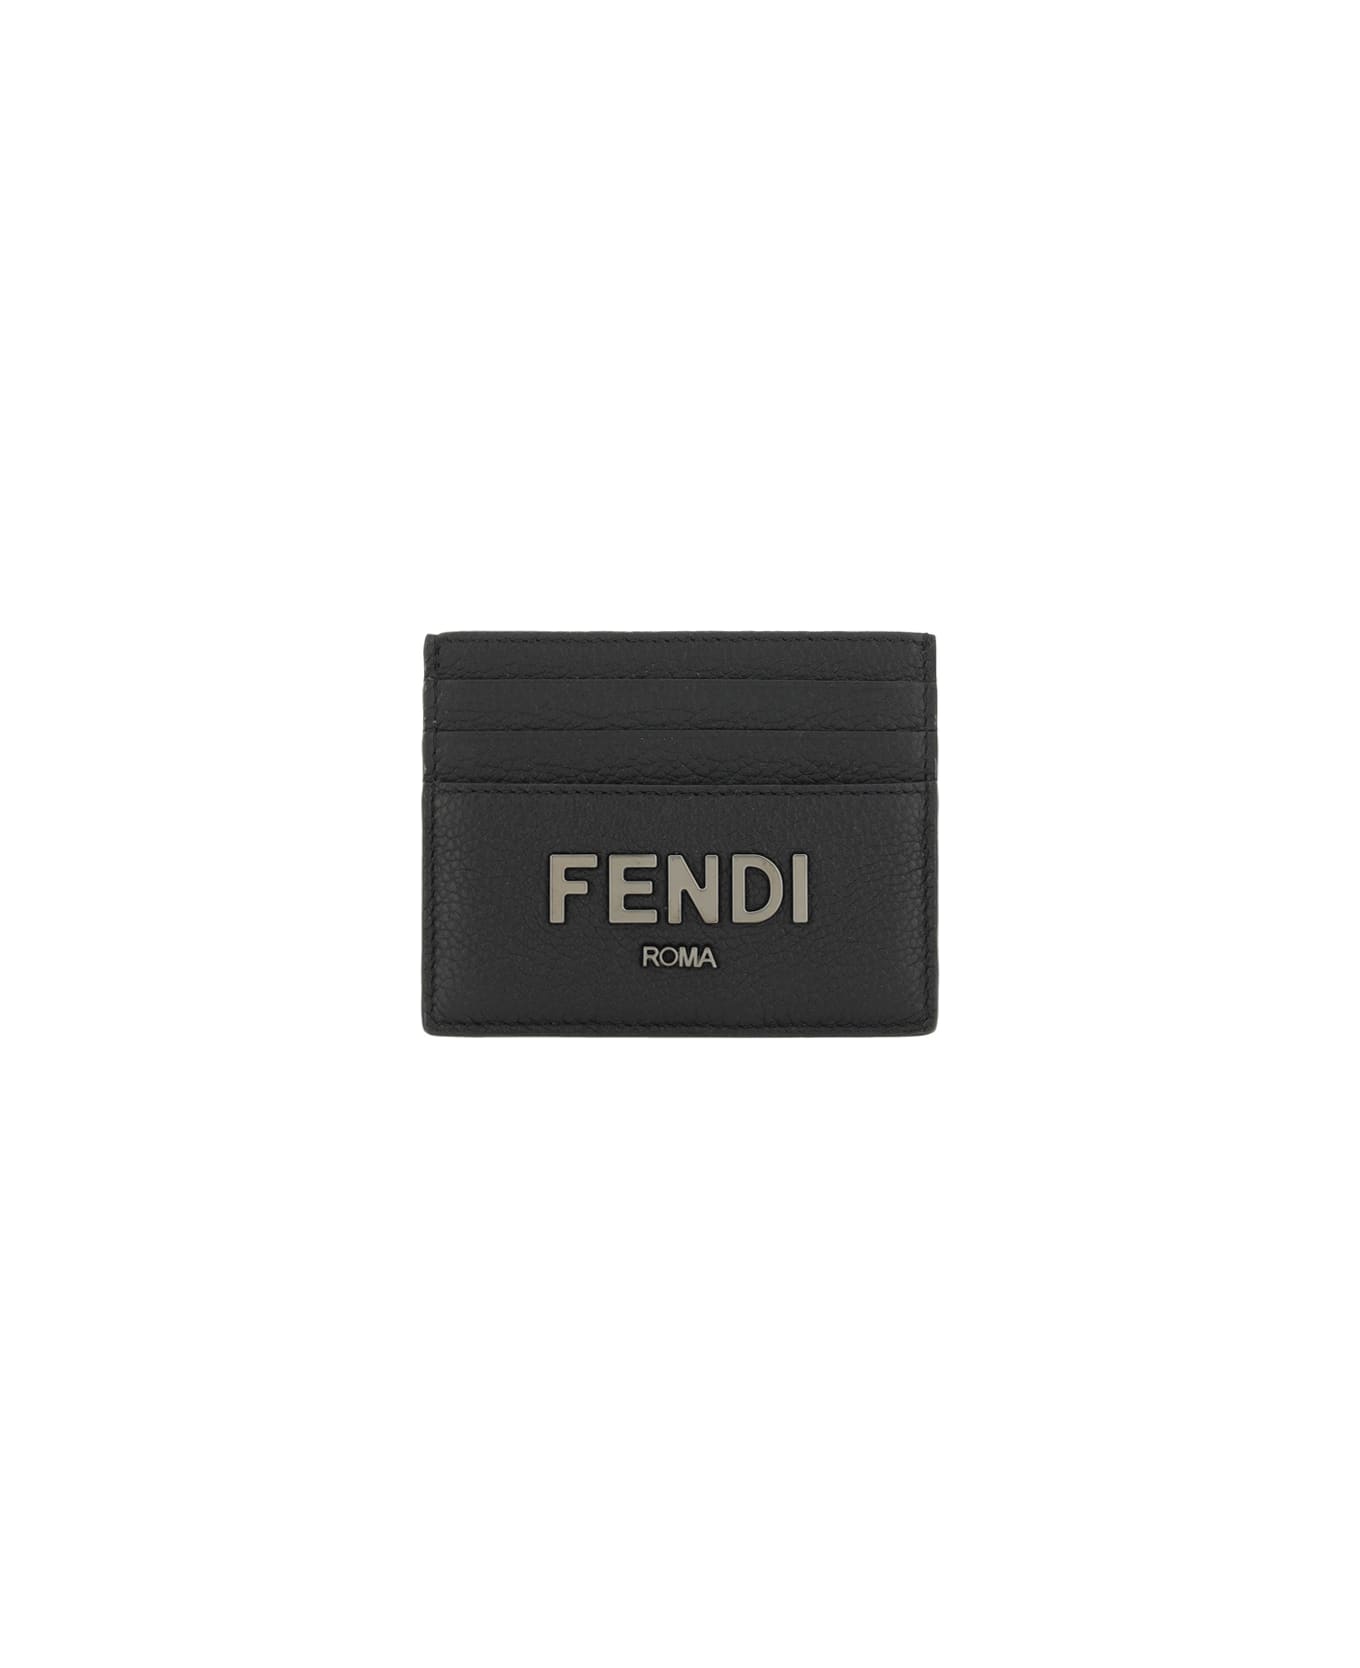 Fendi Card Case Vit.cher - Nero/rubs 財布